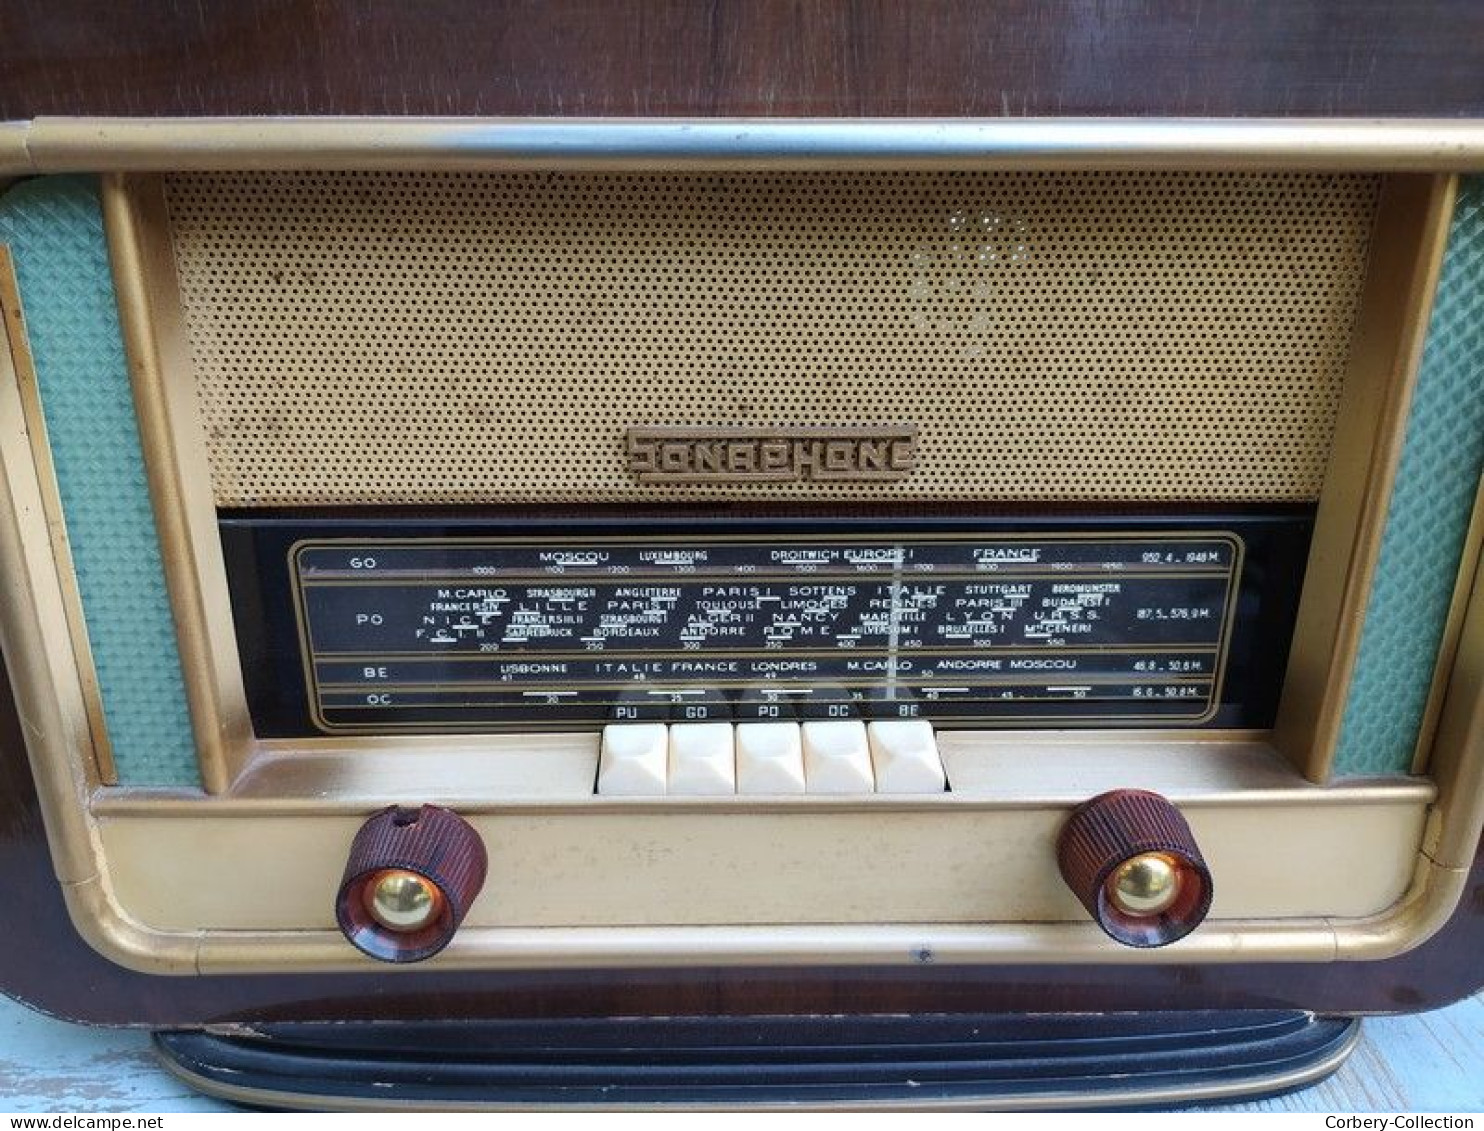 Ancien Poste Radio TSF Marque Sonaphone - Appareils